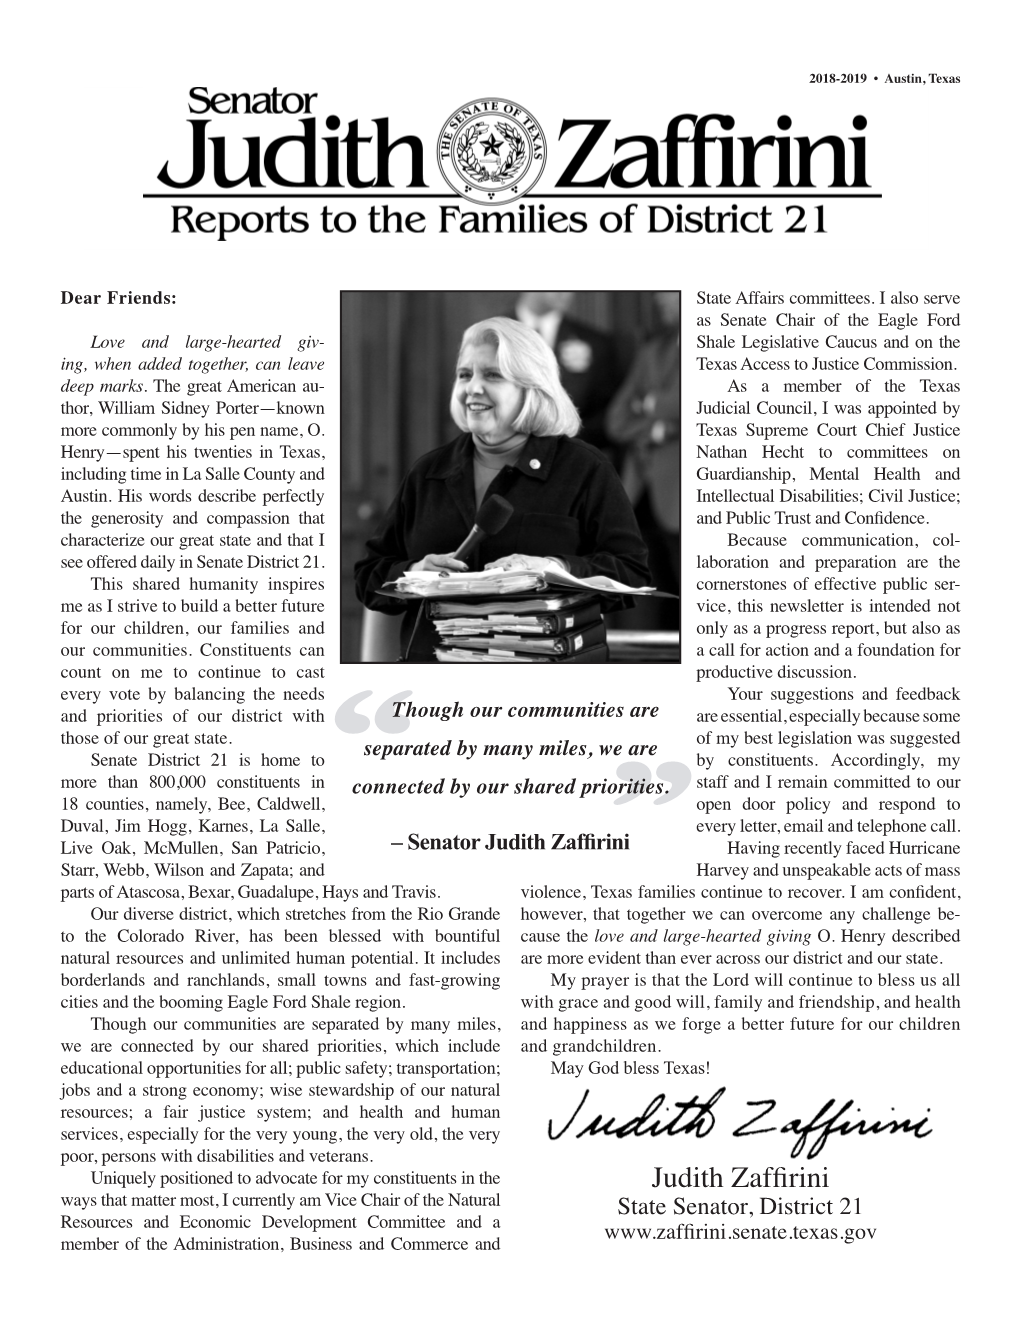 Senator Judith Zaffirini Reports to the Families of District 21